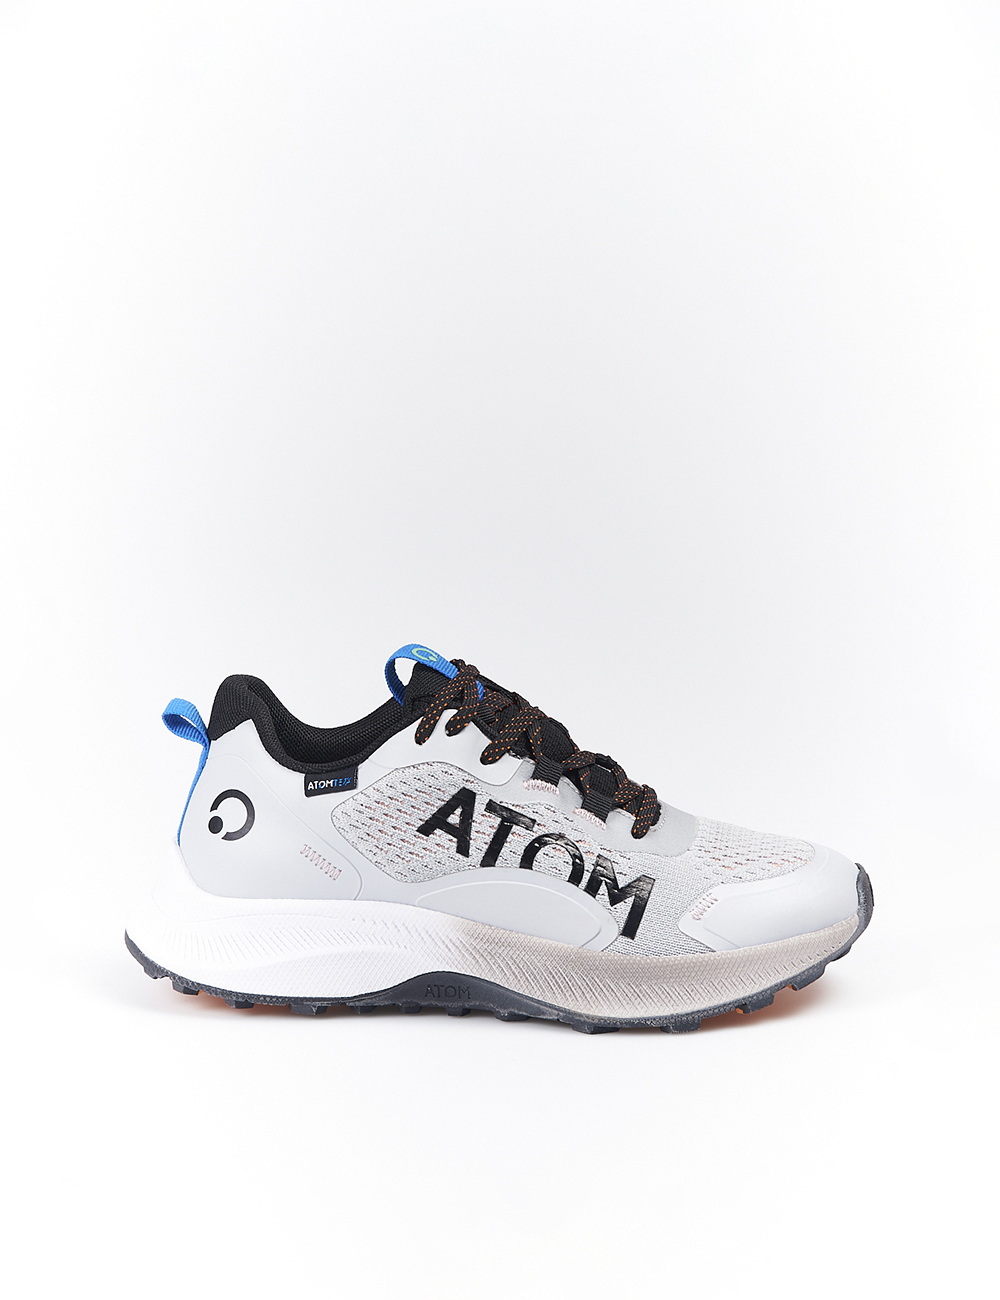 Zapatos Deportivos Atom By Fluchos At114 - Gris - Sneakers Para Mujer  MKP